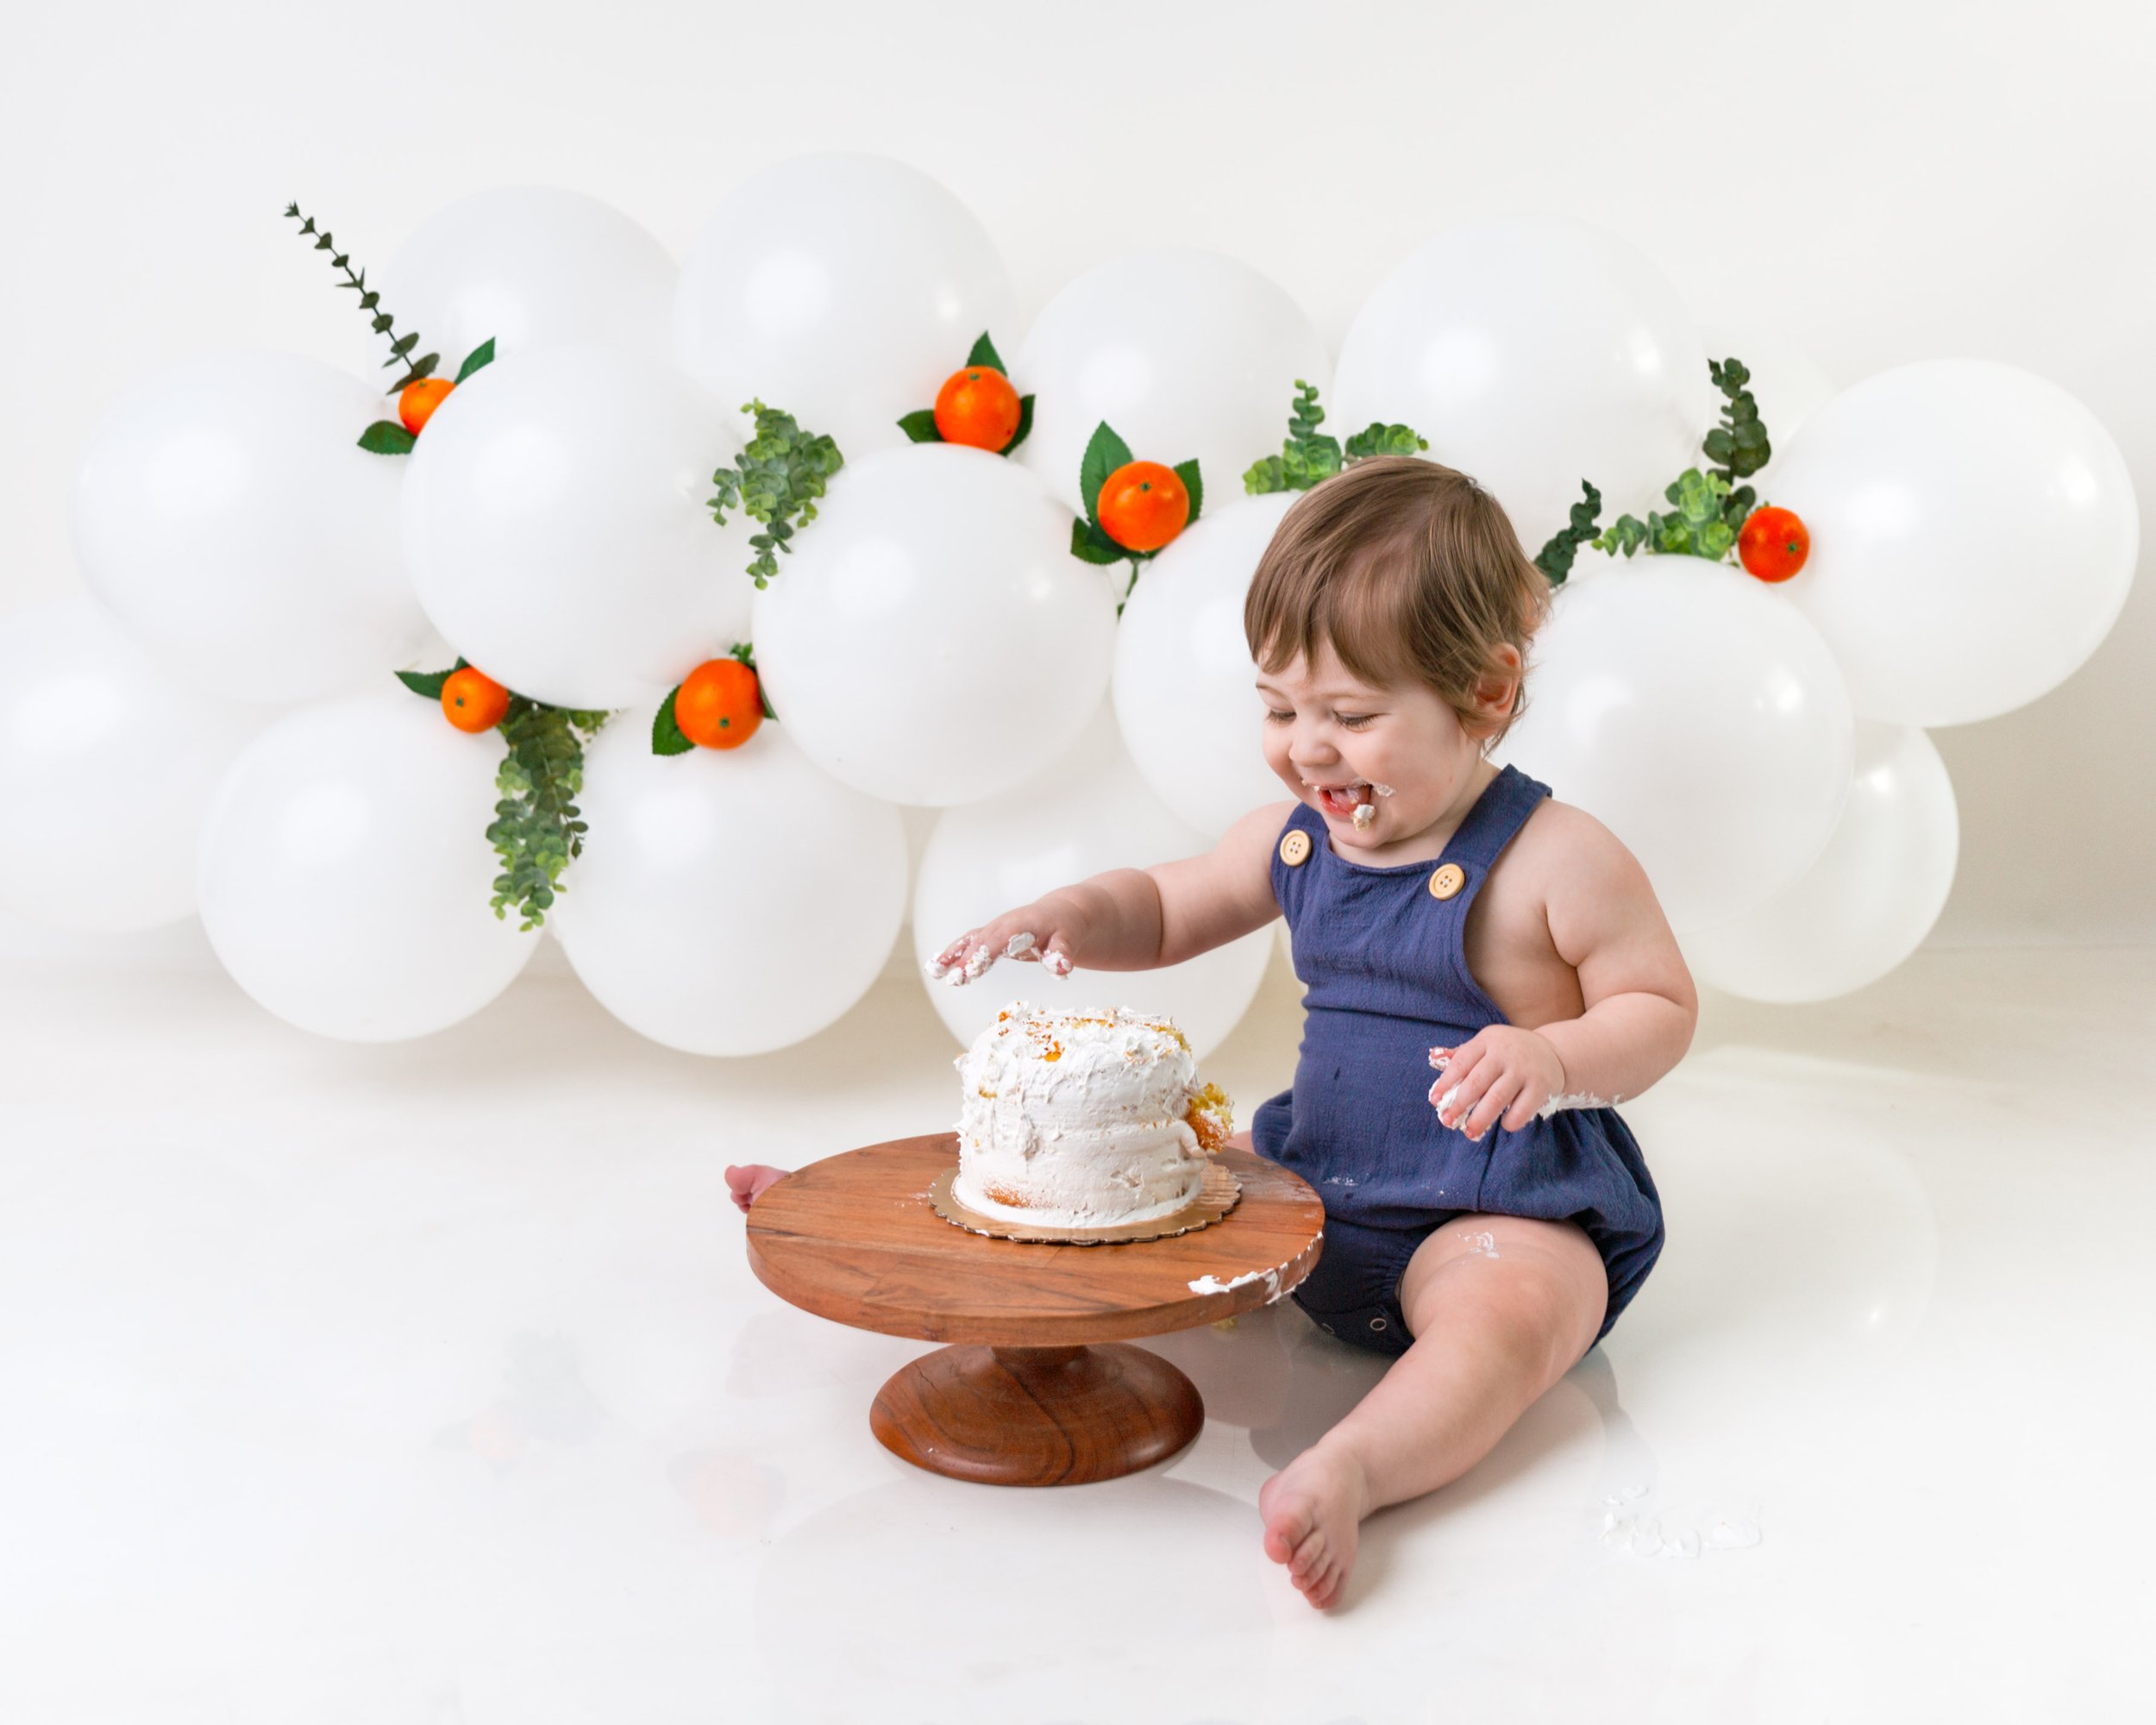 Cake-smash-photos-first-birthday-photoshoot-one-year-old-newborn-photography-spokane-washington-8.jpg